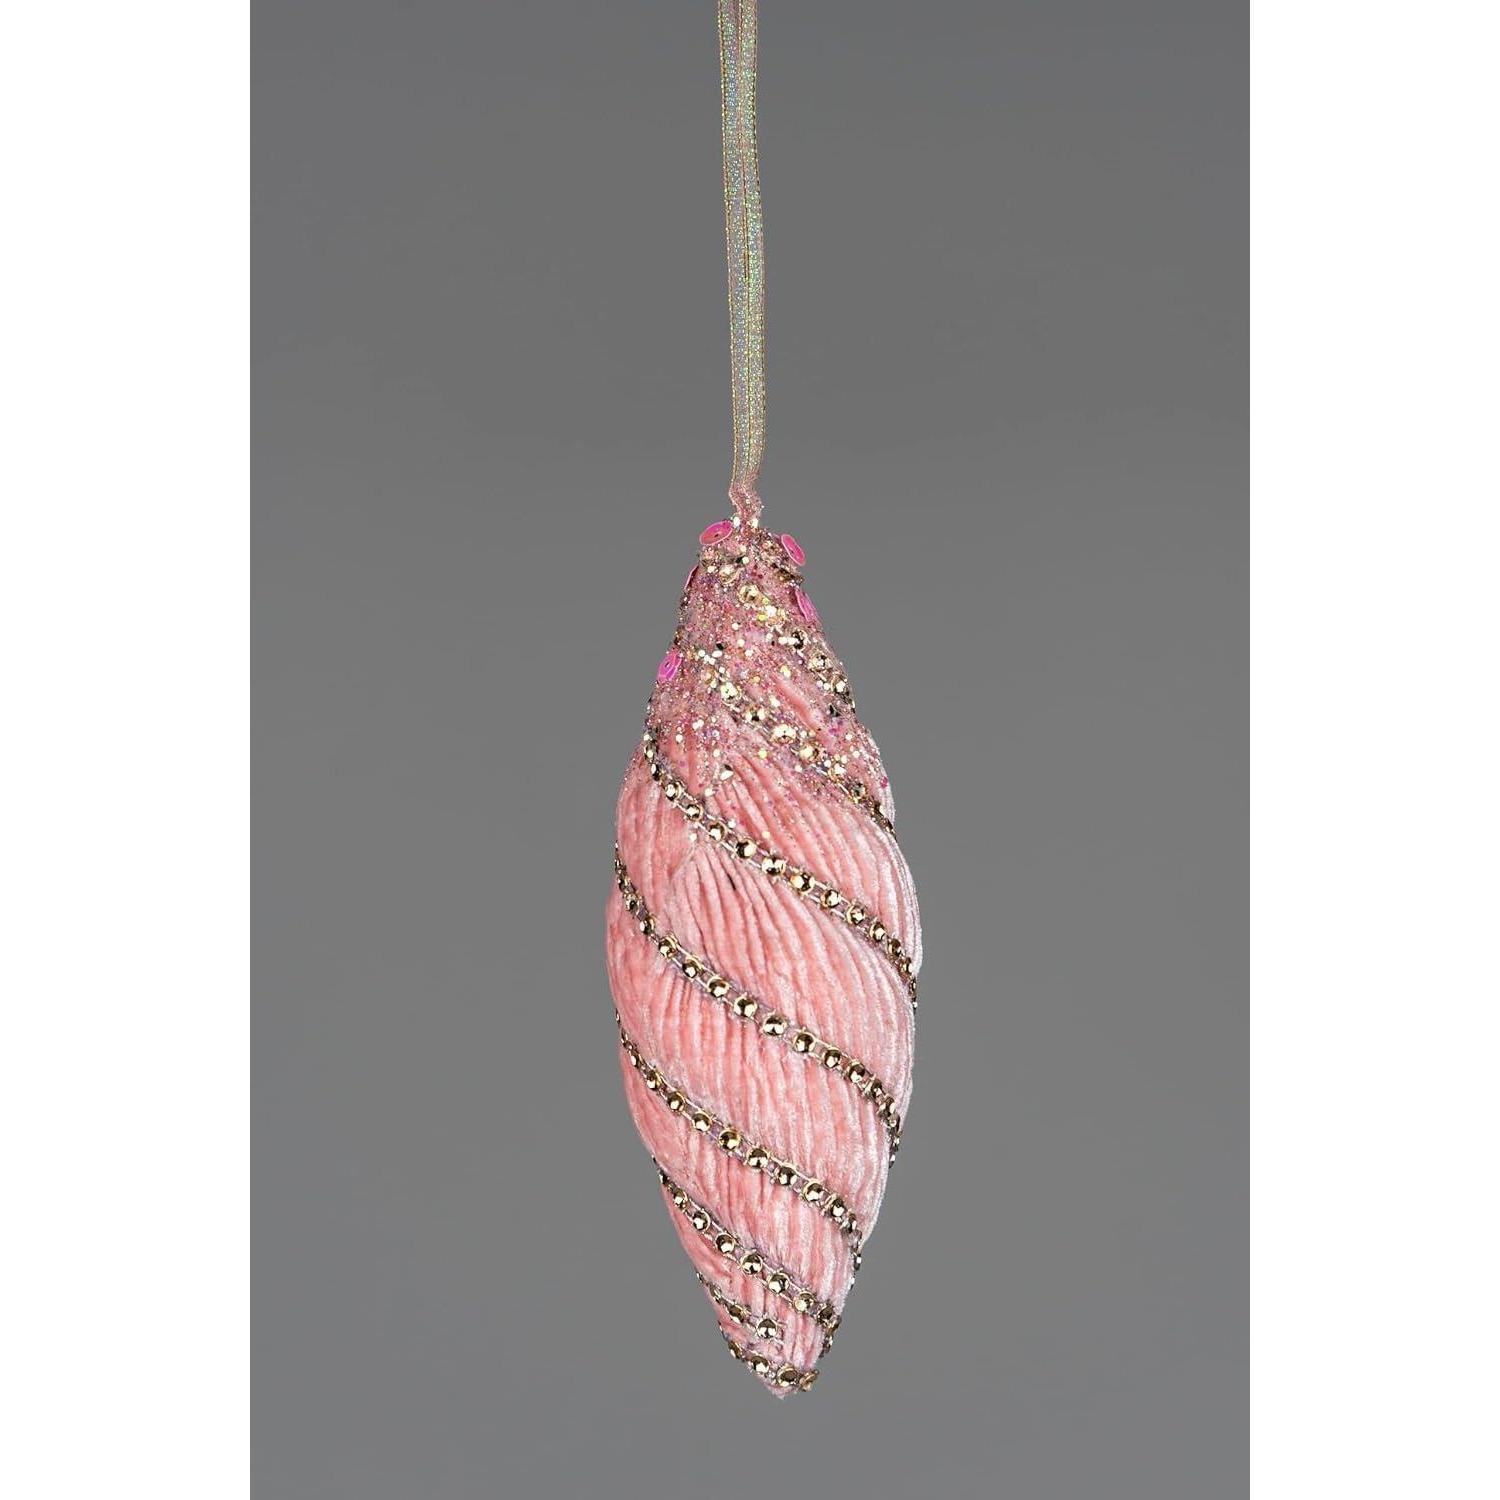 15cm Nut Shape Bauble Baby Pink - Christmas Hanging Decoration - image 1